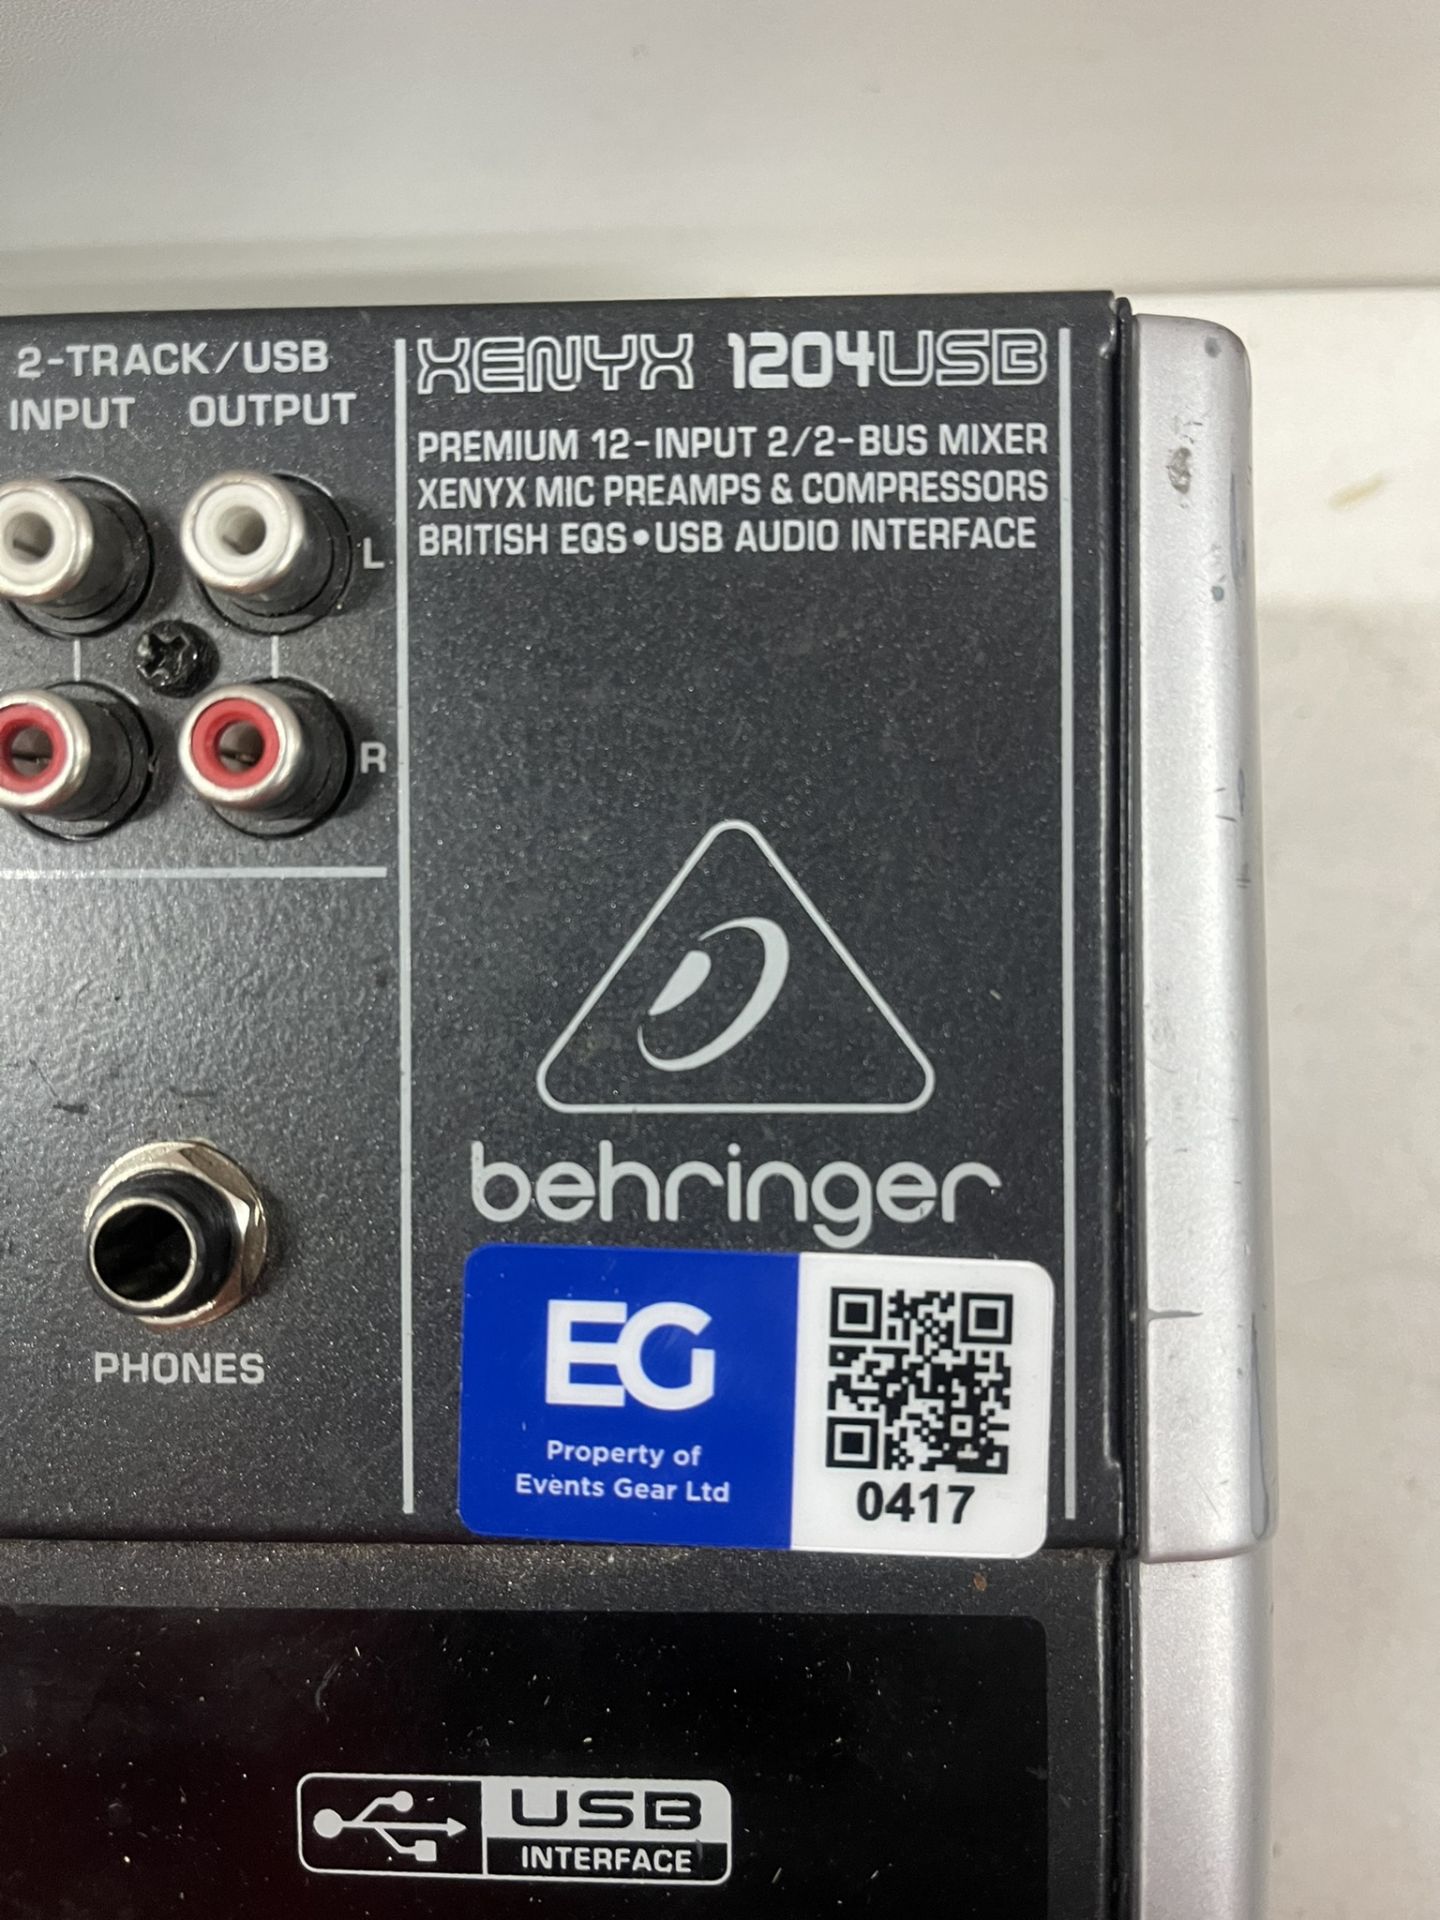 Behringer HENYX 1204USB Premium 12-Input 2/2-Bus Mixer - Image 5 of 5